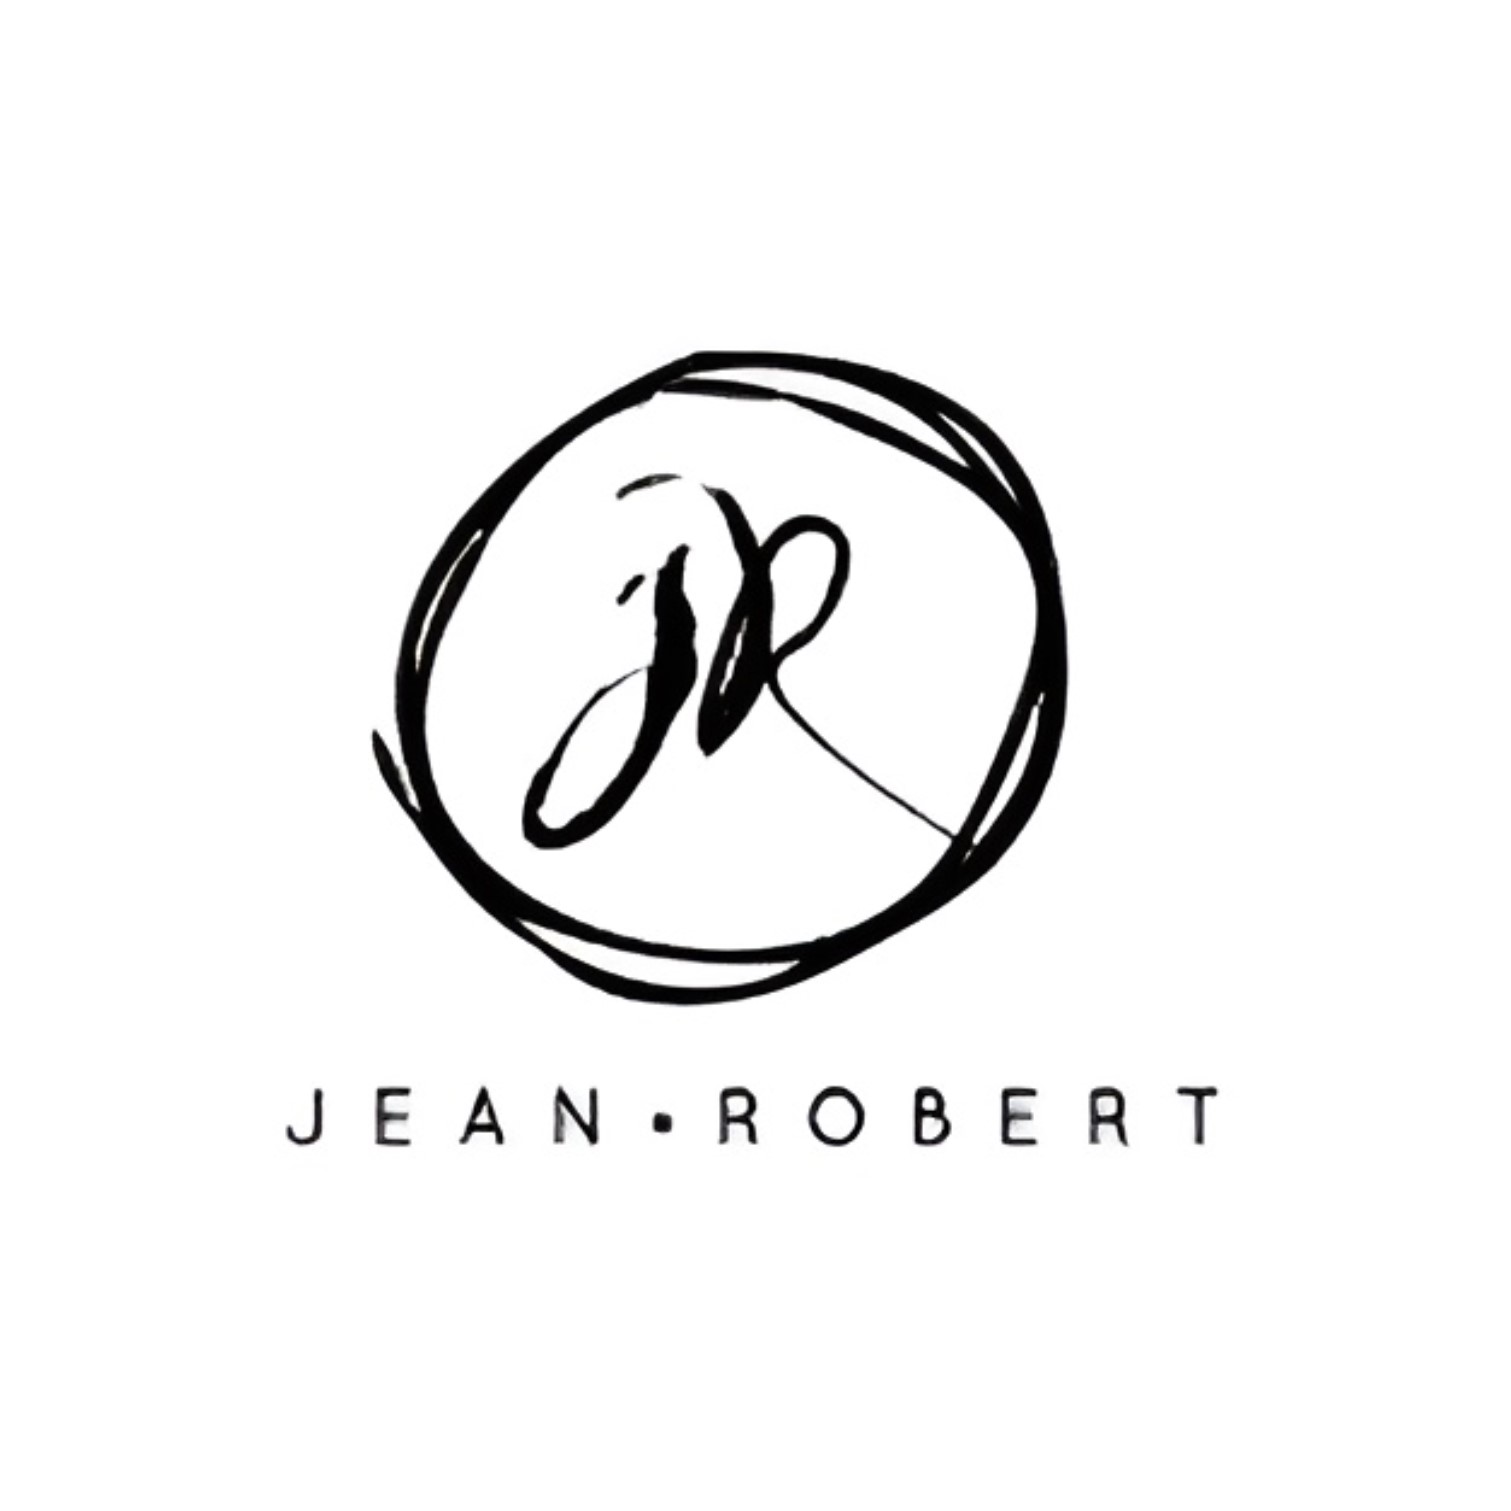 Jean Robert